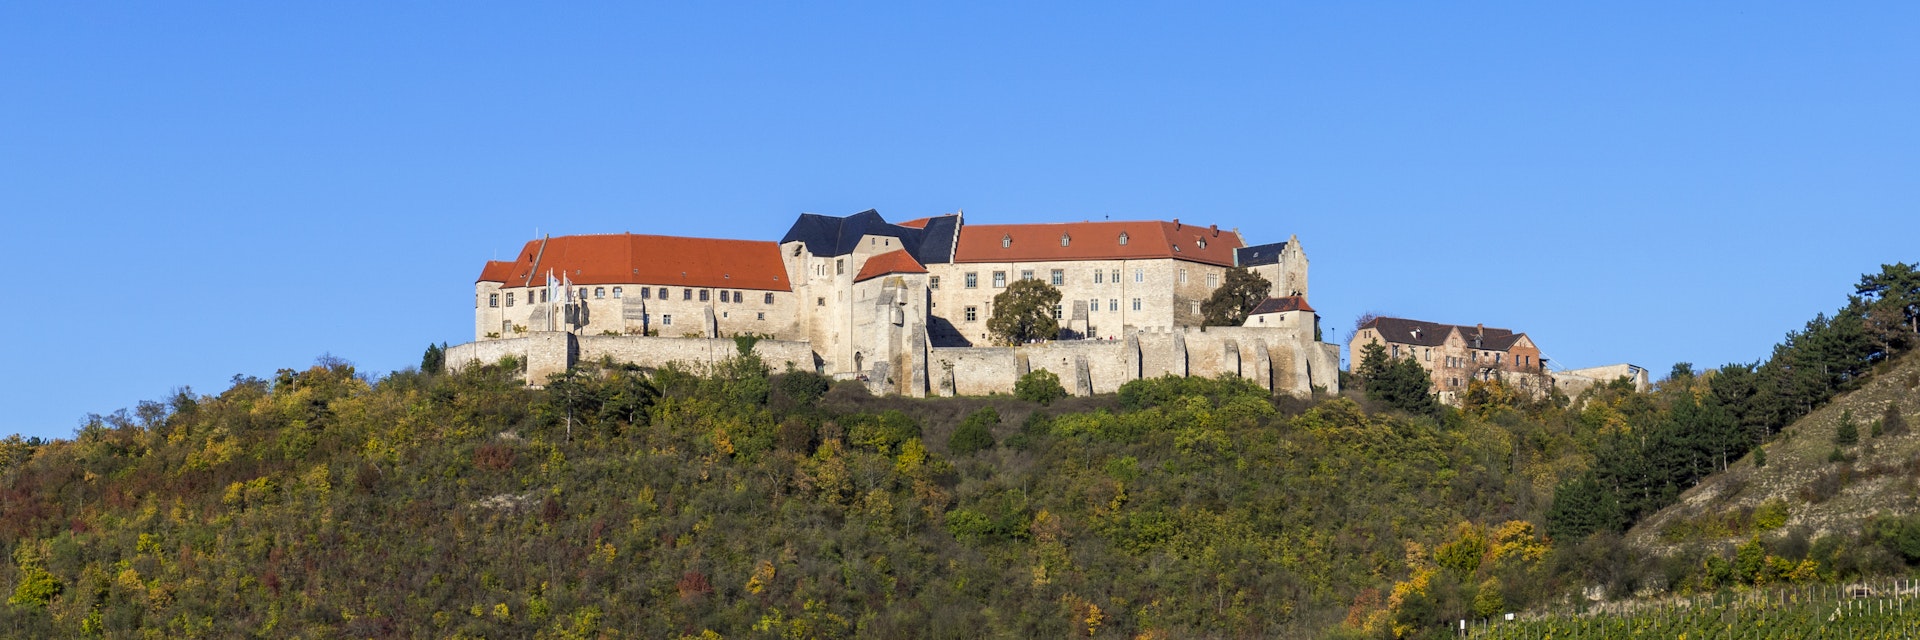 Neuenburg Castle, Freyburg, Germany.